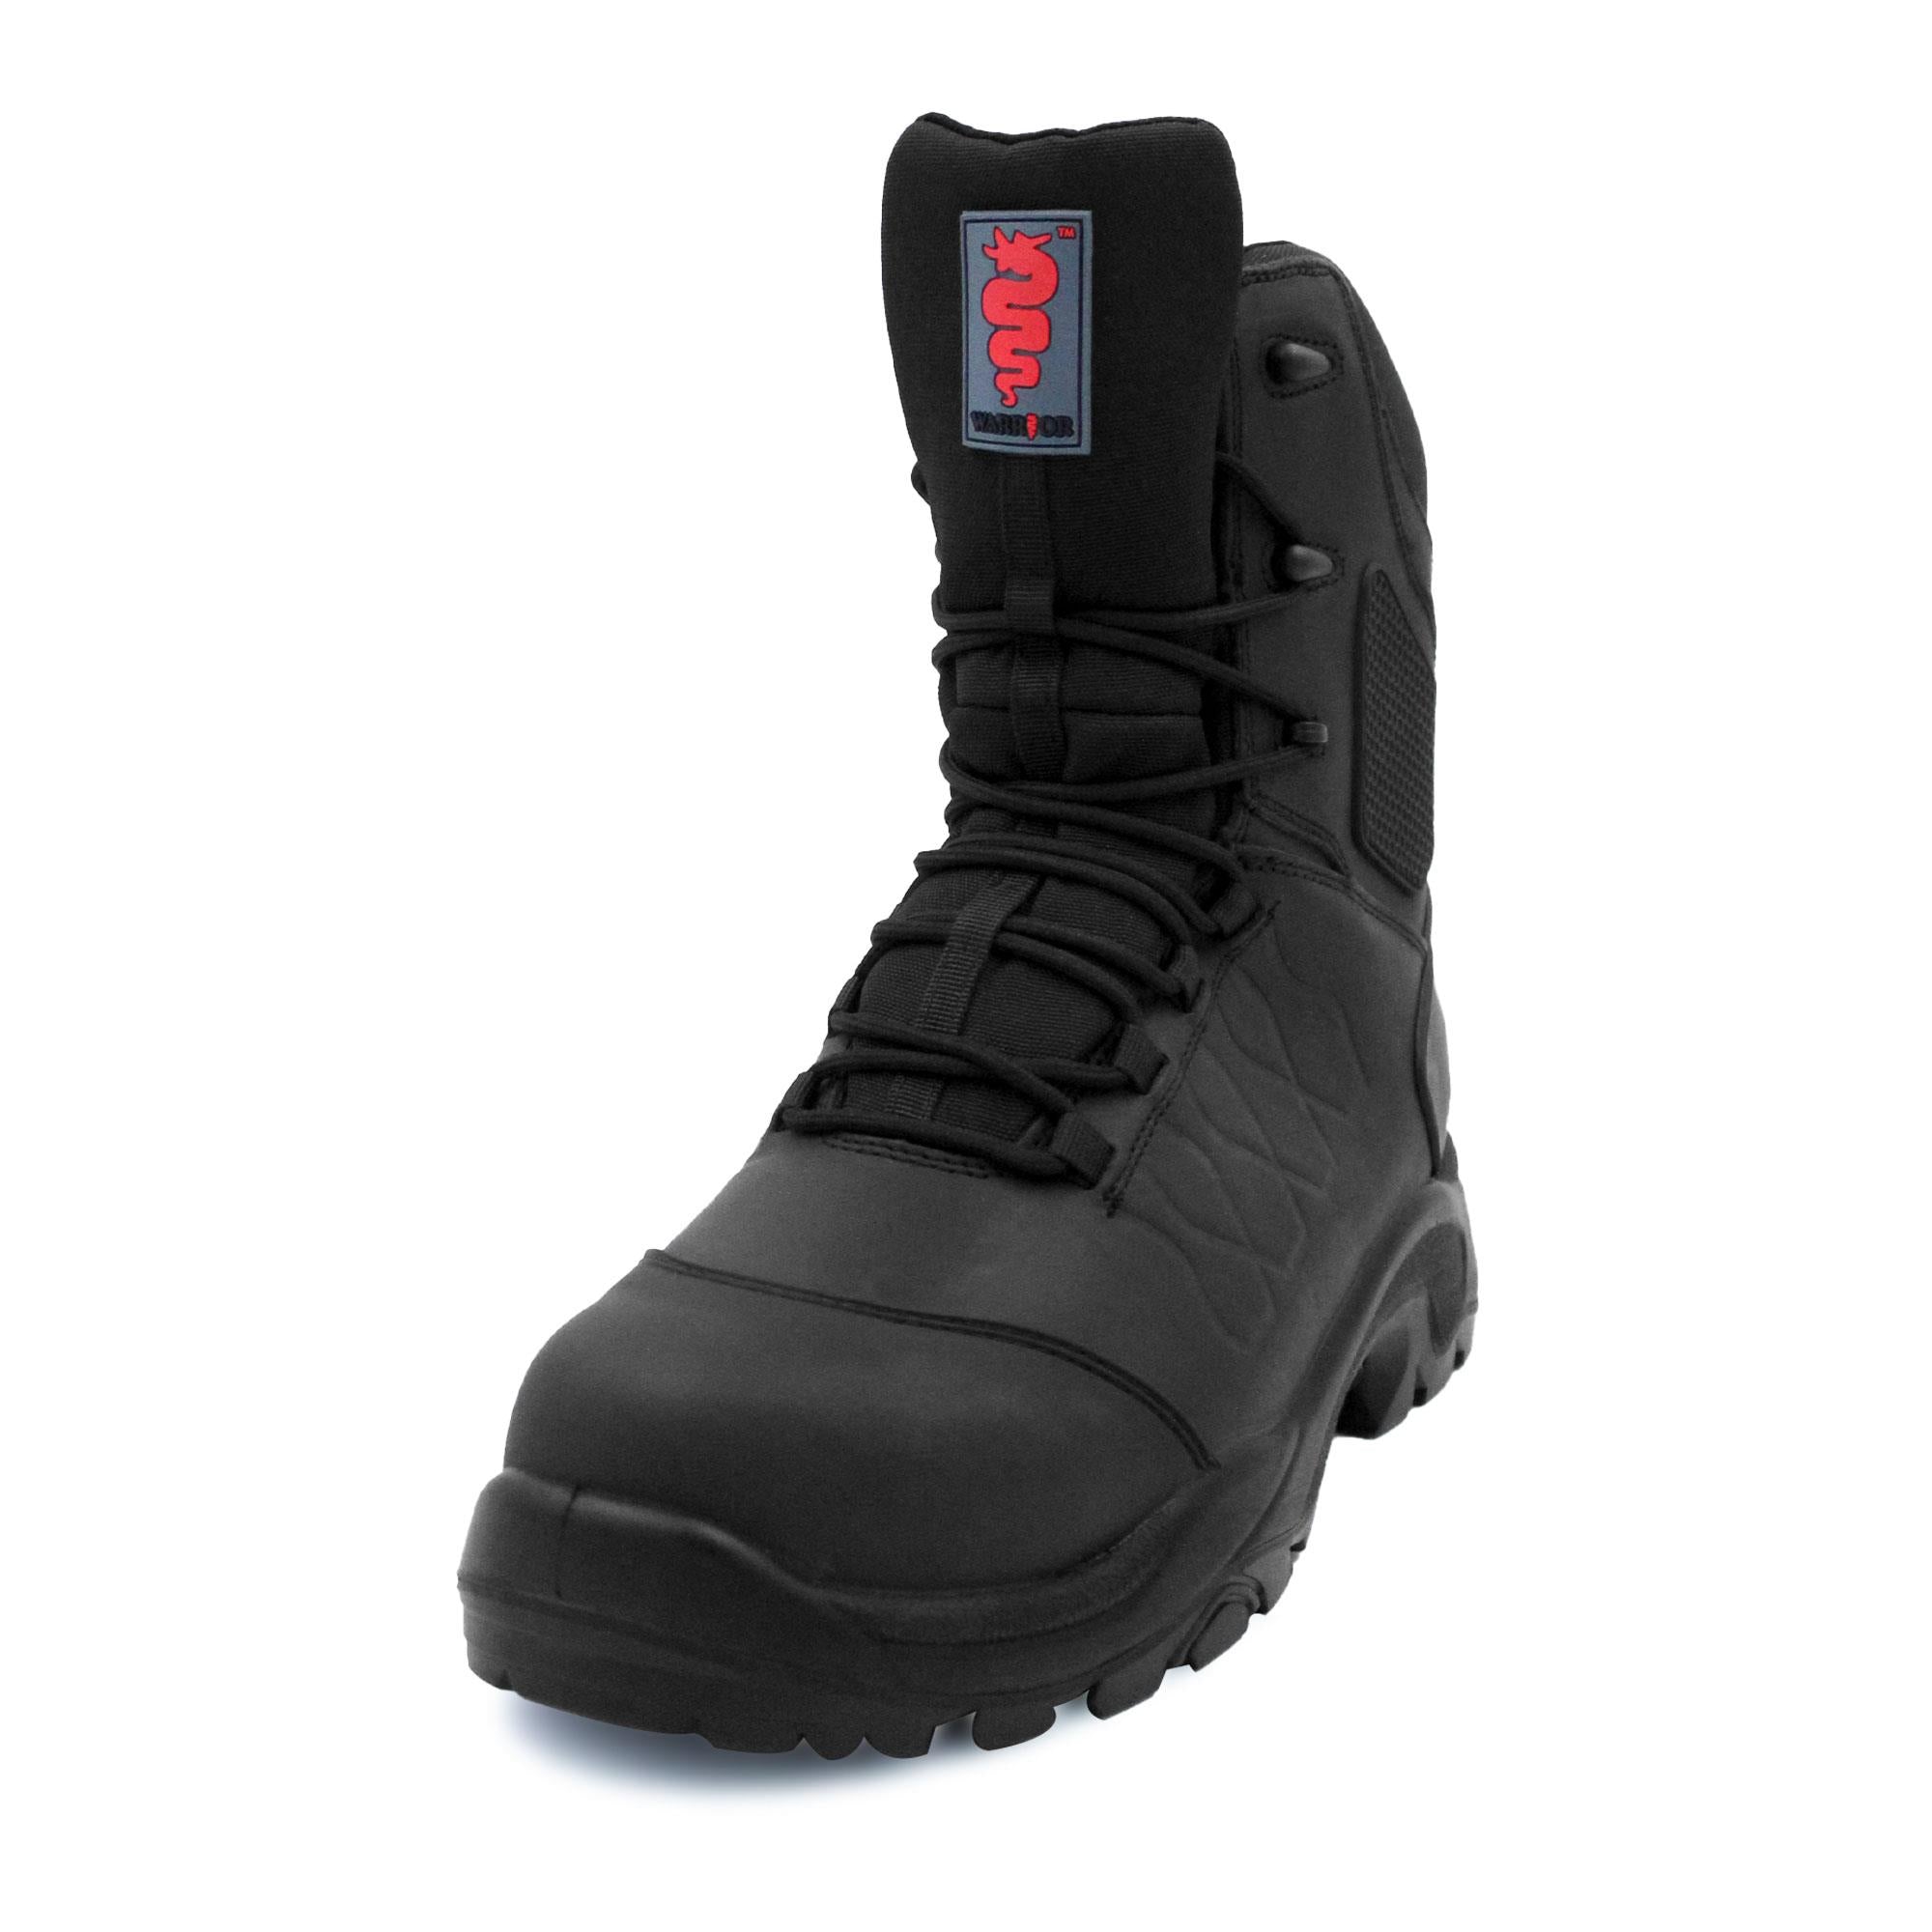 Warrior S7 black leather Poron metatarsal glass fibre toe/midsole safety work boot